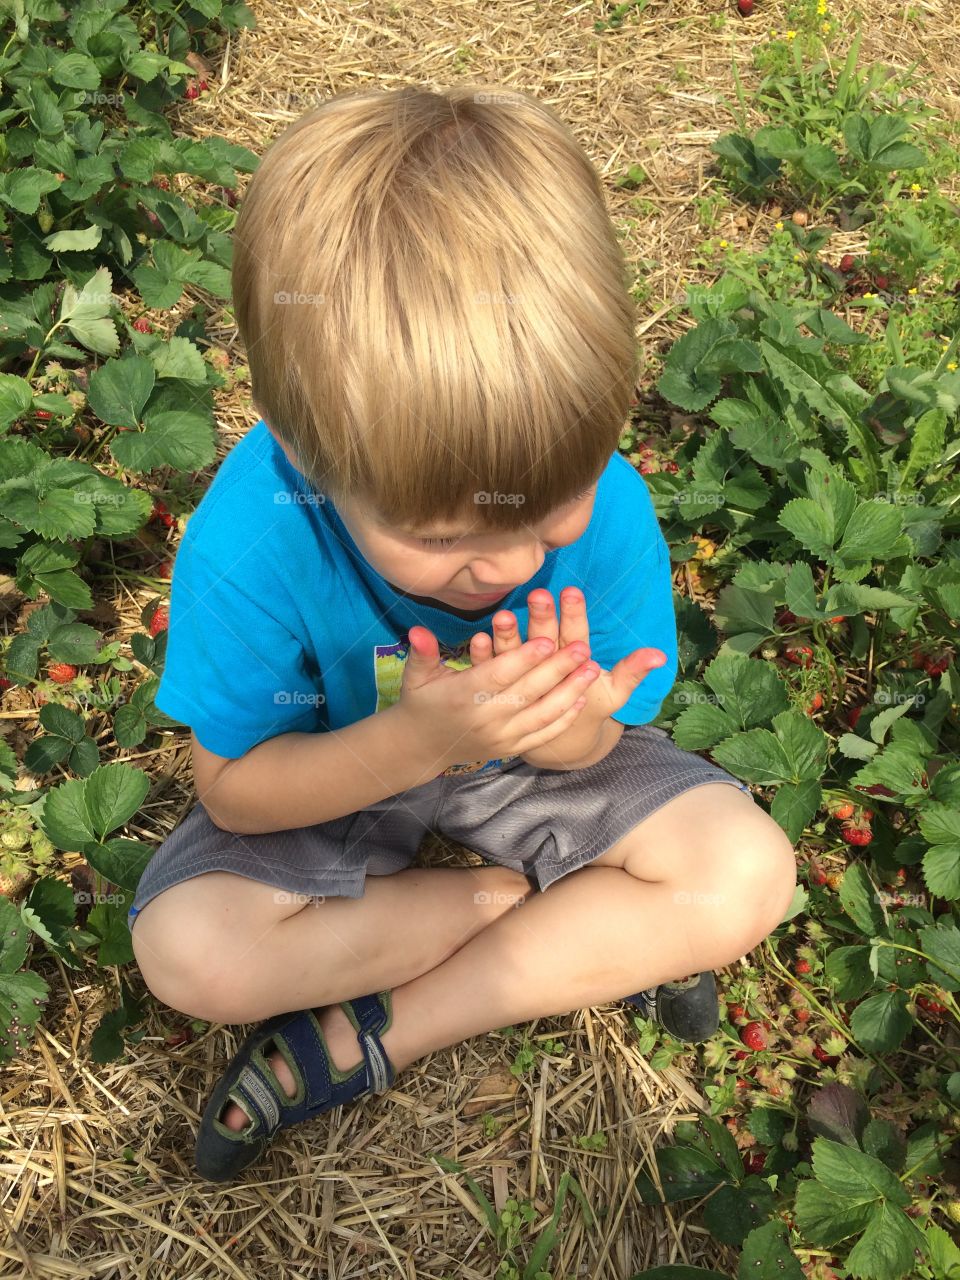 "Picking" strawberries